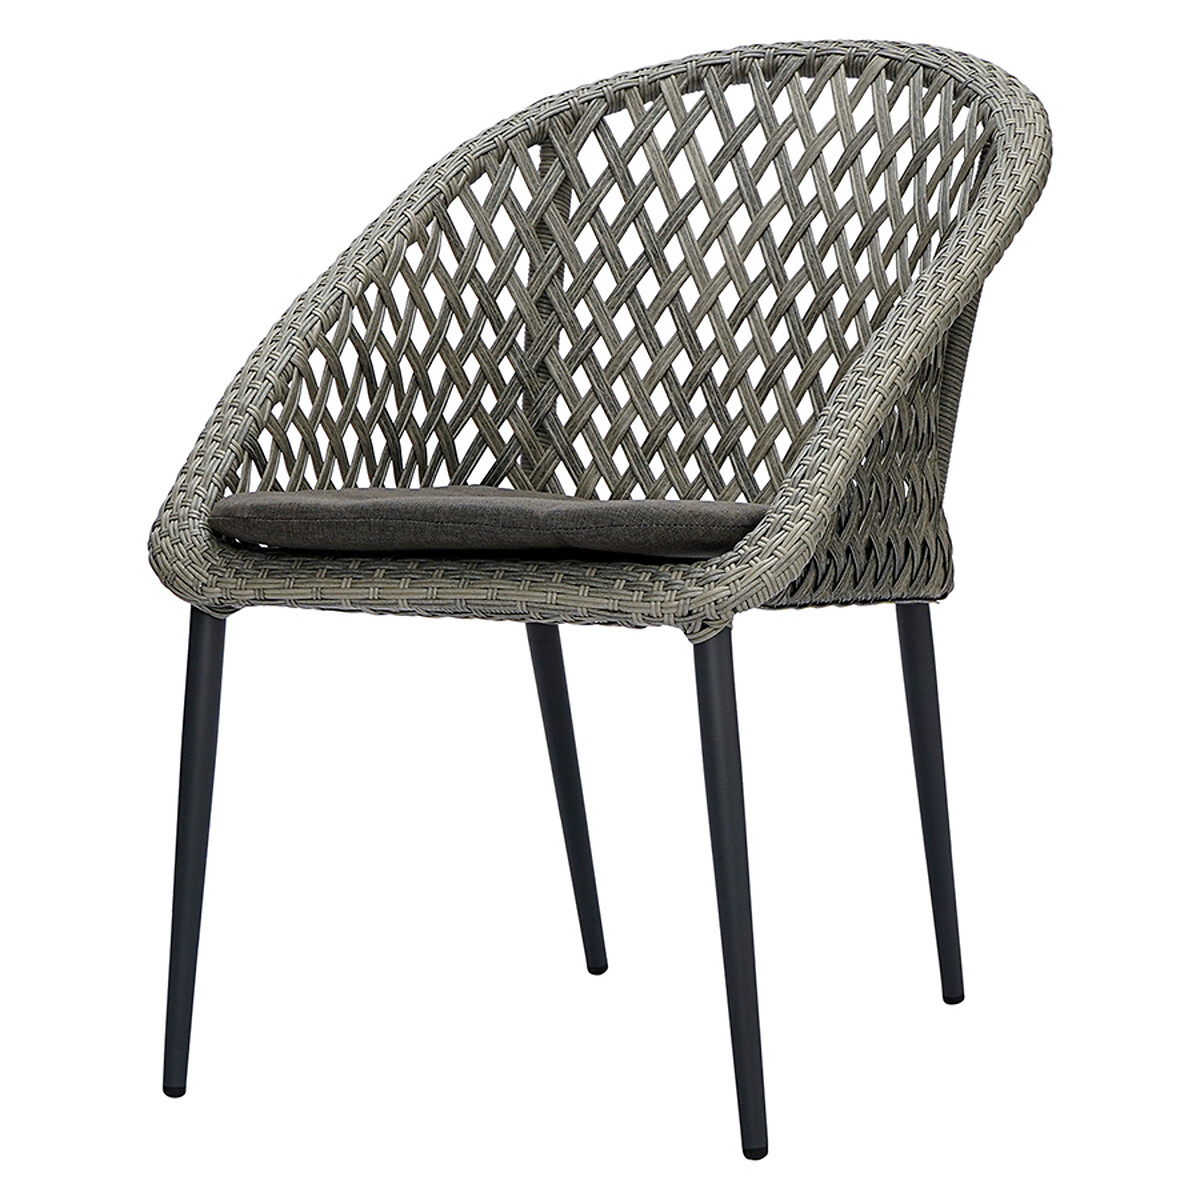 Стул Sverre серый единый размер серый стул с фланелевым покрытием tibby единый размер серый